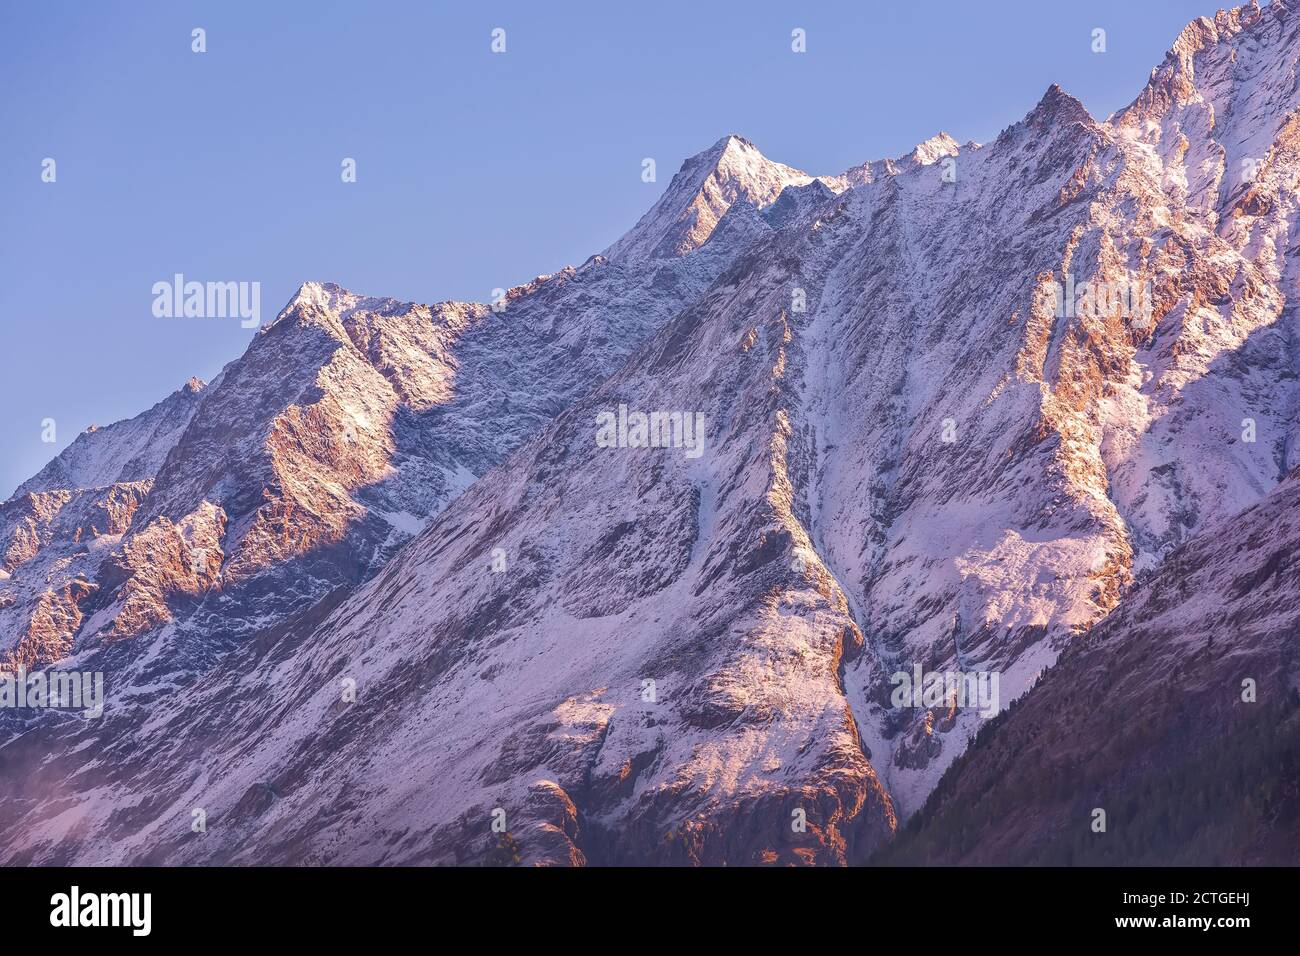 Alpi svizzere in Svizzera, cime innevate da vicino, vista da Zermatt Foto Stock